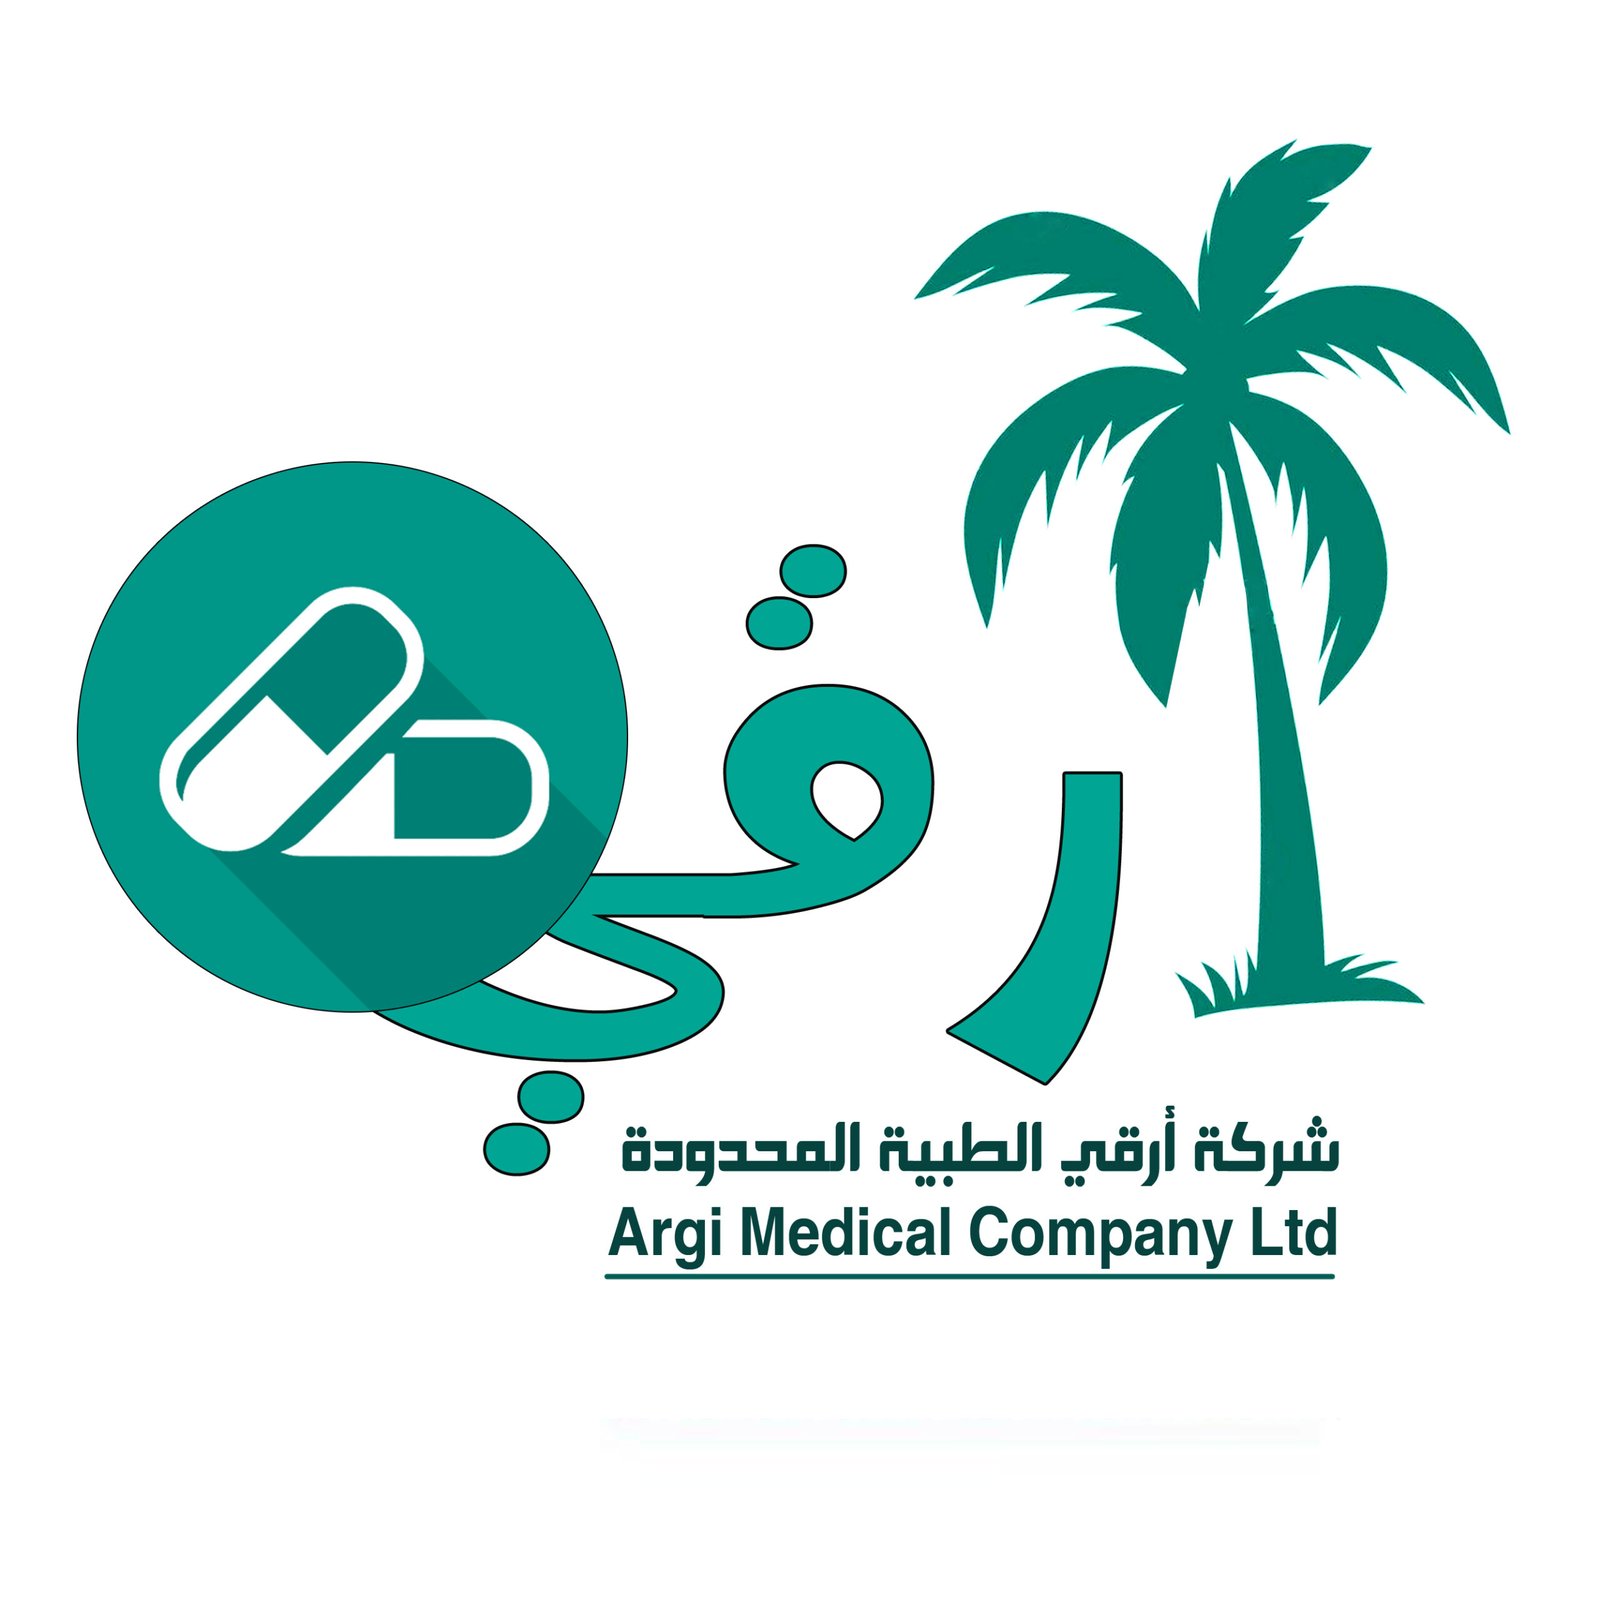 Argi Medical